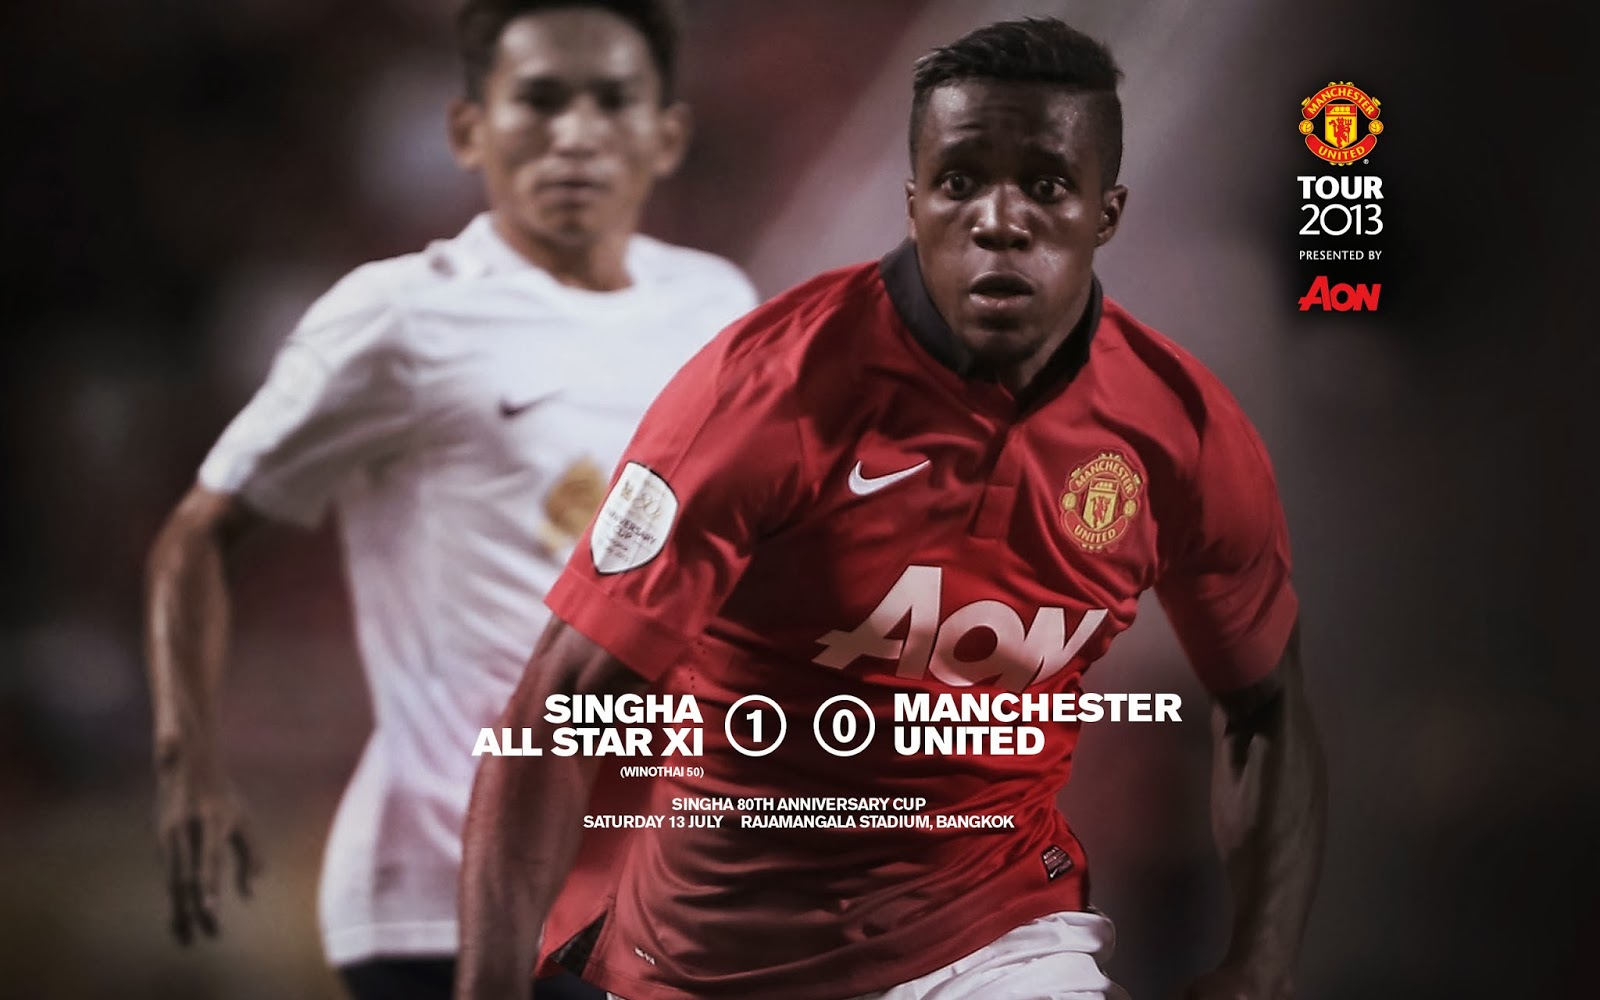 Ảnh – Manchester United Tour 2013 – Wallpaper Cực Đẹp | Infographic Tiếng  Việt | Infographic Blog